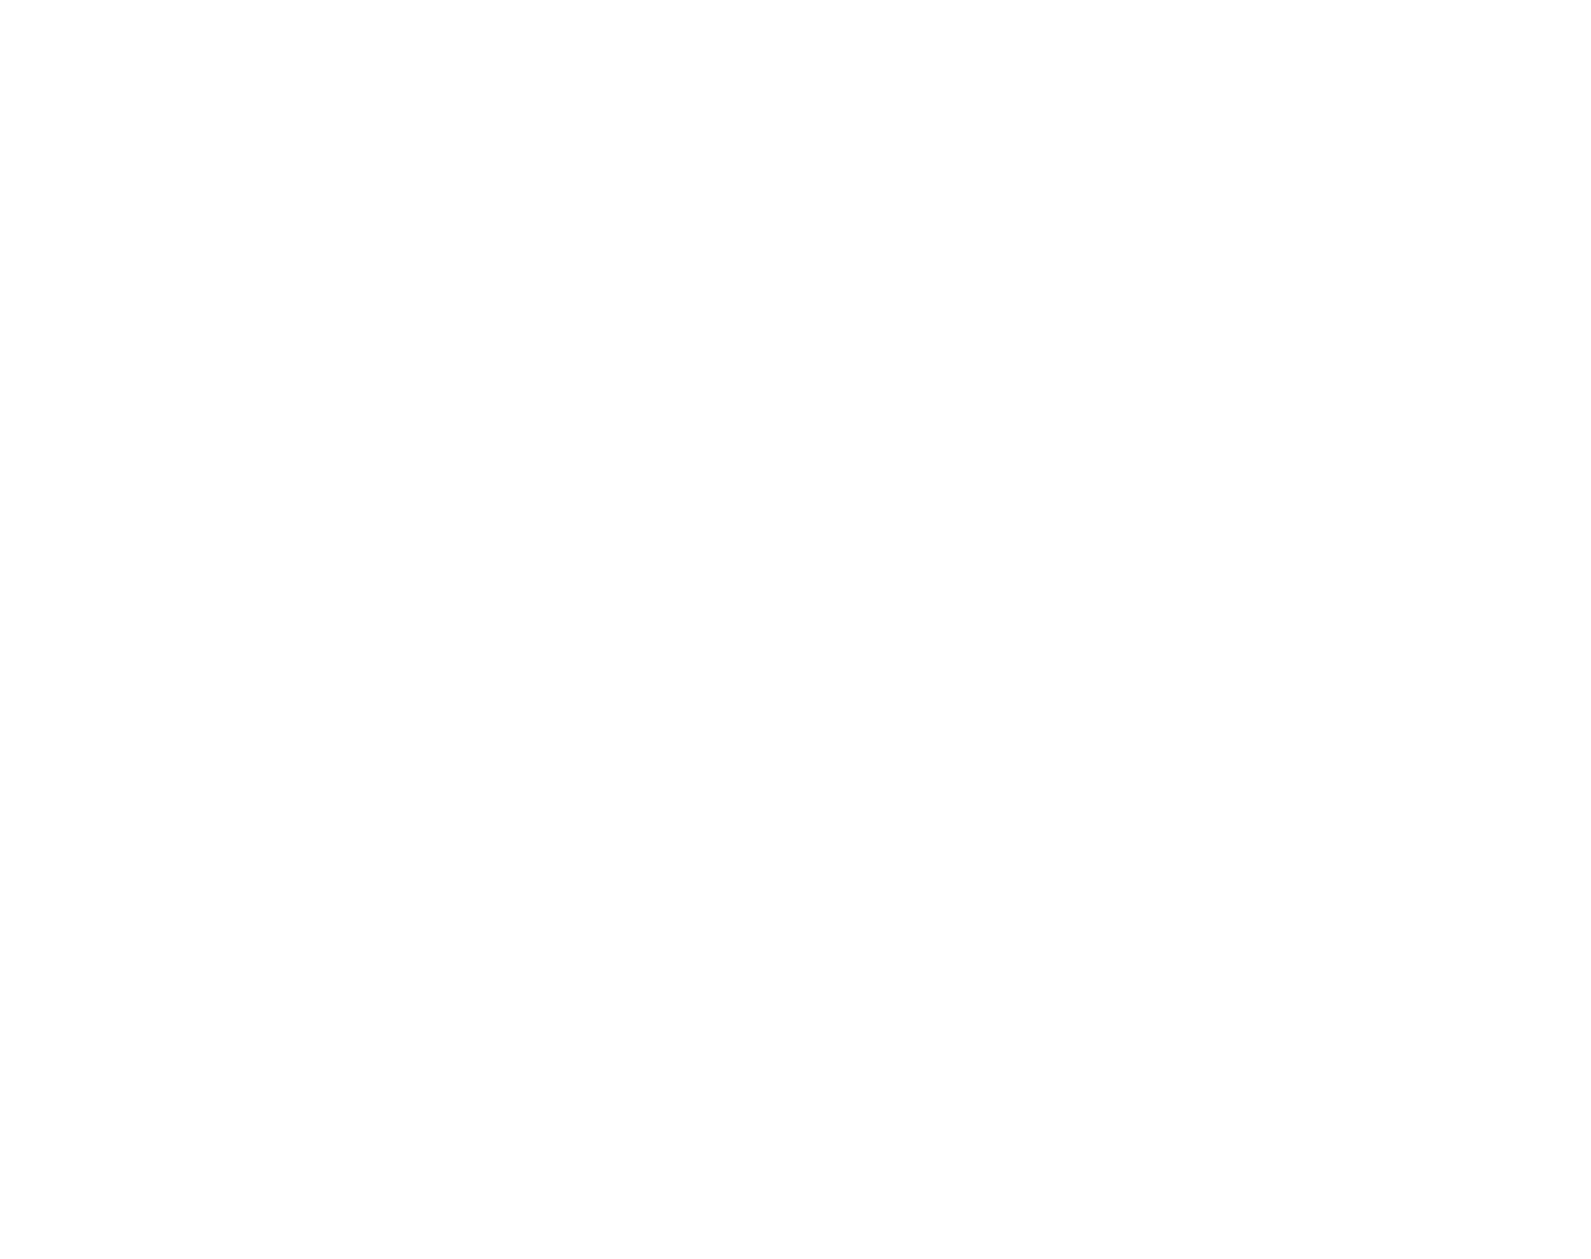 Topgolf Callaway Brands logo pour fonds sombres (PNG transparent)